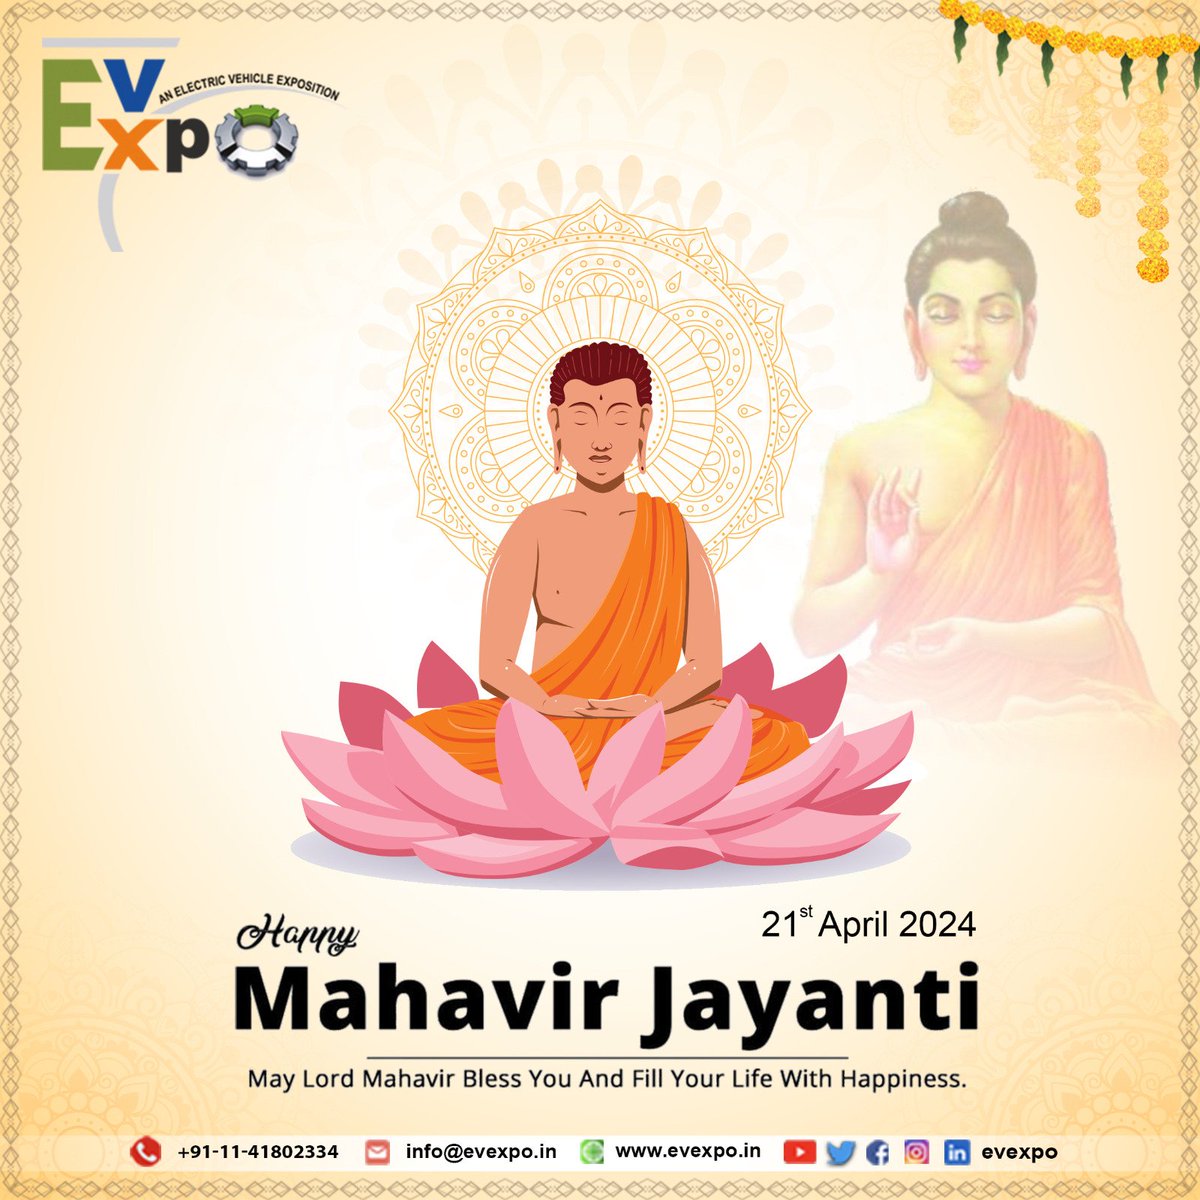 'Happy Mahavir Jayanti! 🙏 Today, we celebrate the birth anniversary of Lord Mahavir, the 24th Tirthankara of Jainism, at EV Expo. His teachings of non-violence, truth, and compassion continue to inspire millions worldwide. #MahavirJayanti #MahaveerJayanti